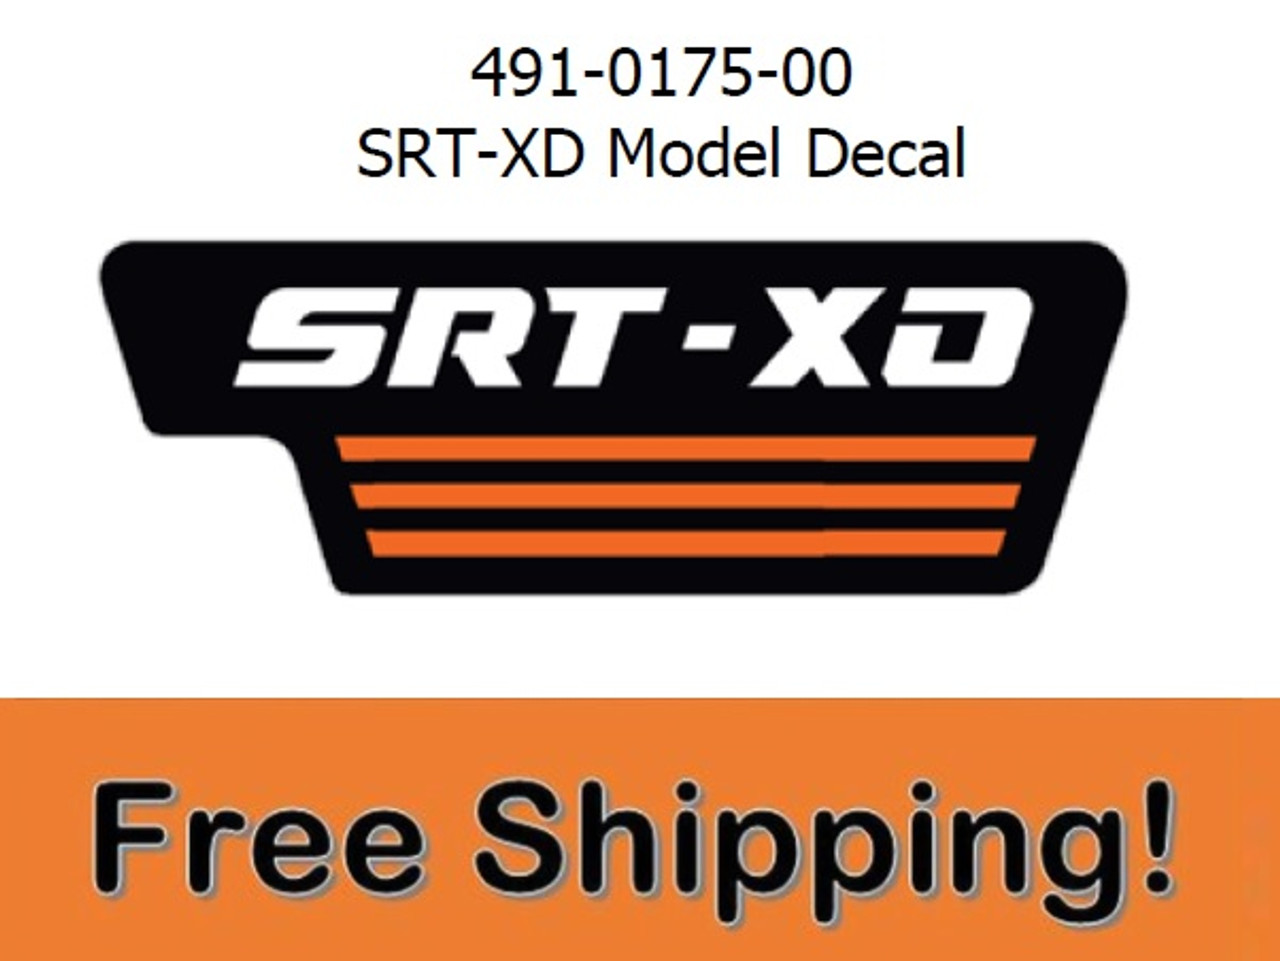 Spartan SRT-XD Model Decal